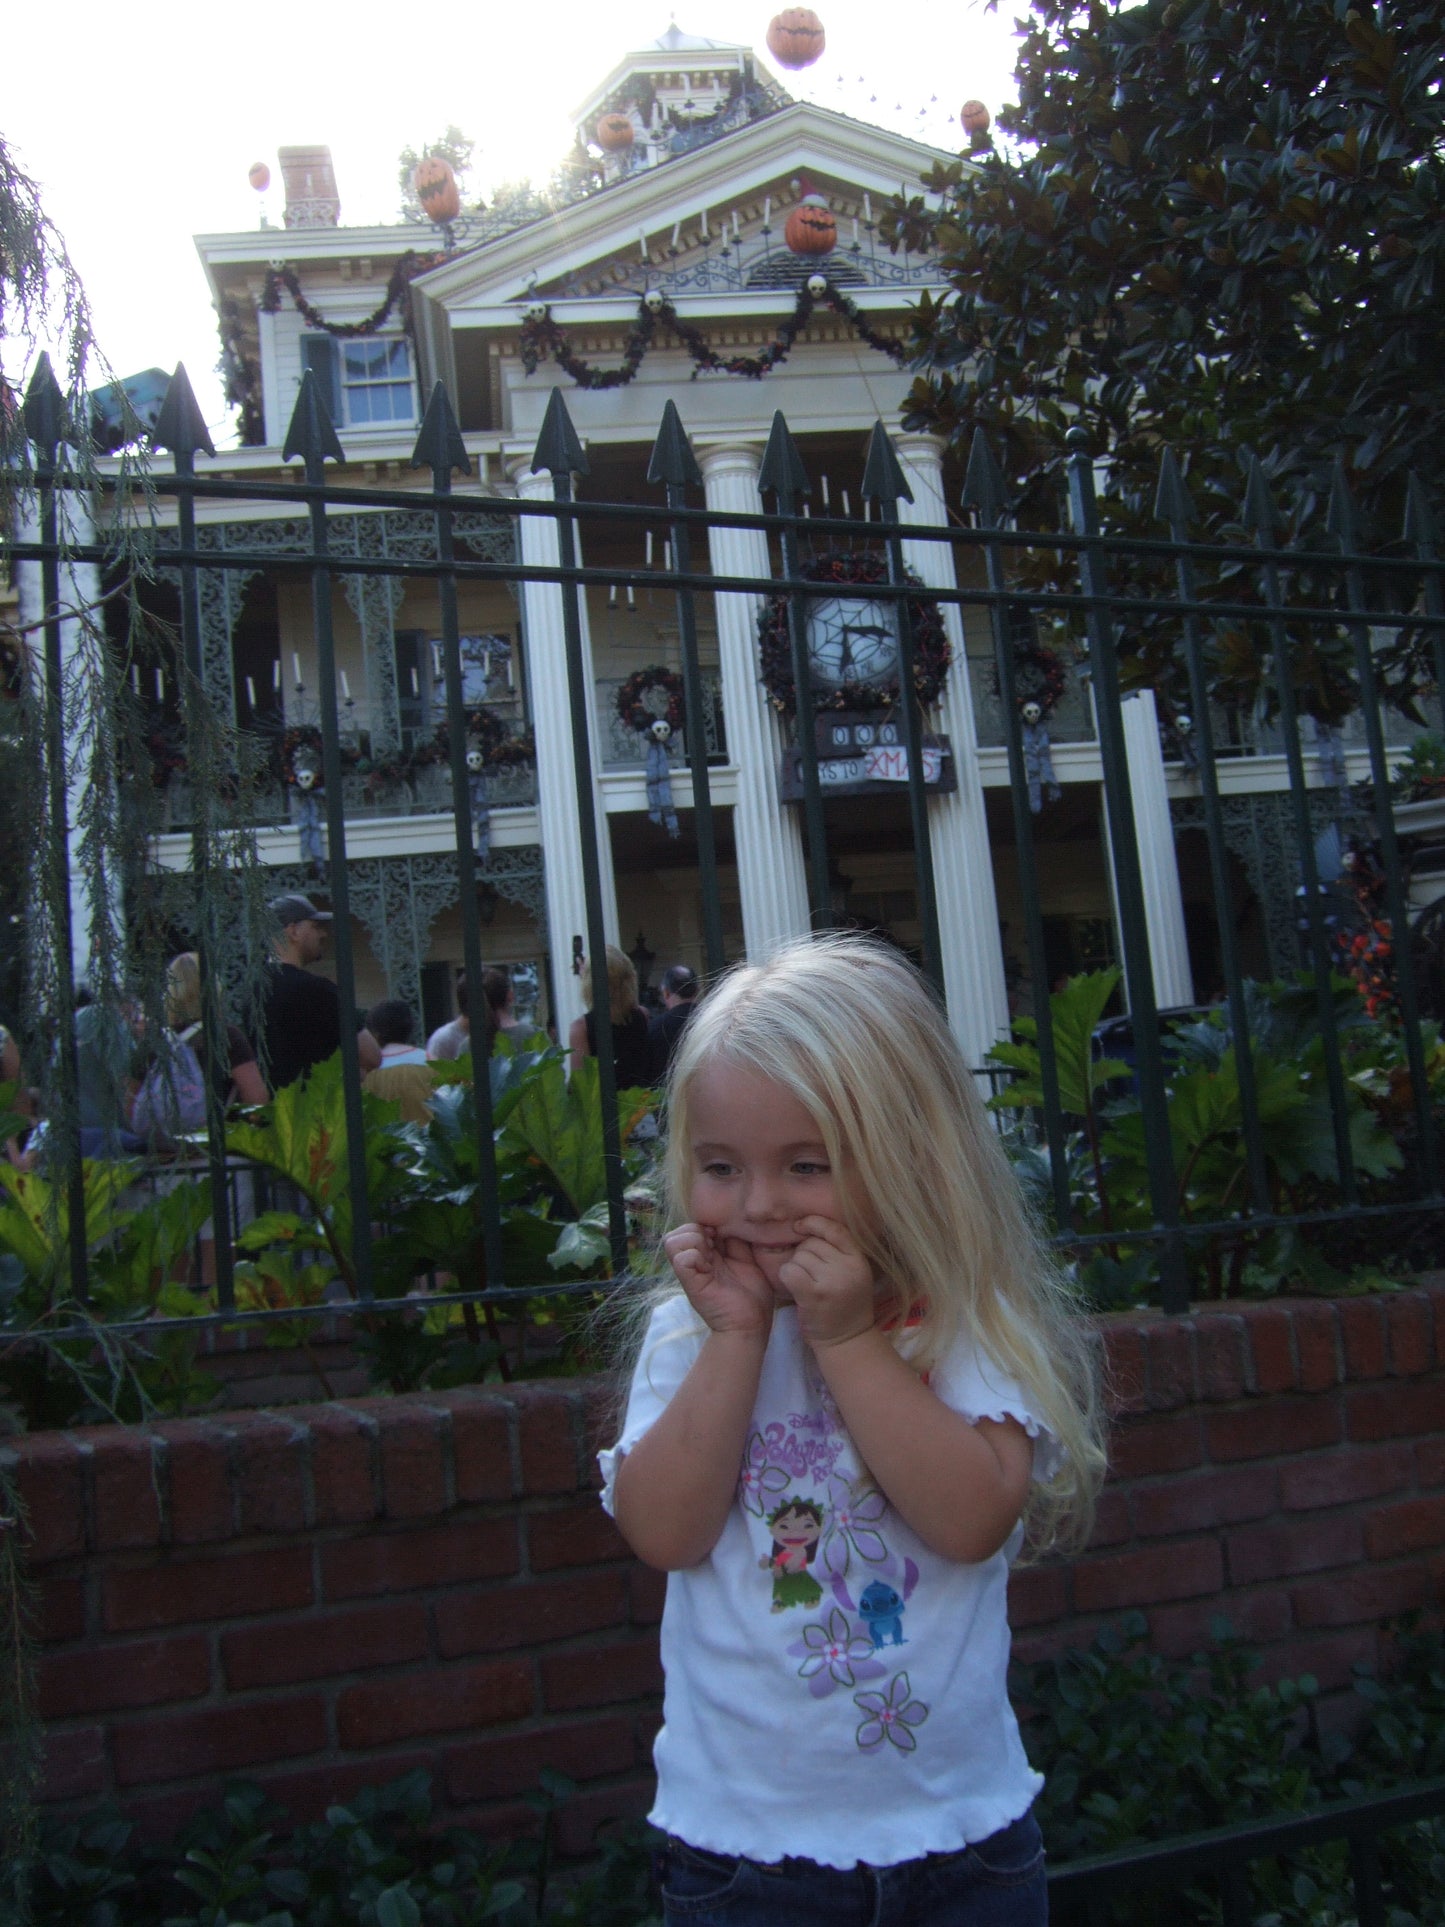 Disneyland Haunted Mansion 5” x 5”